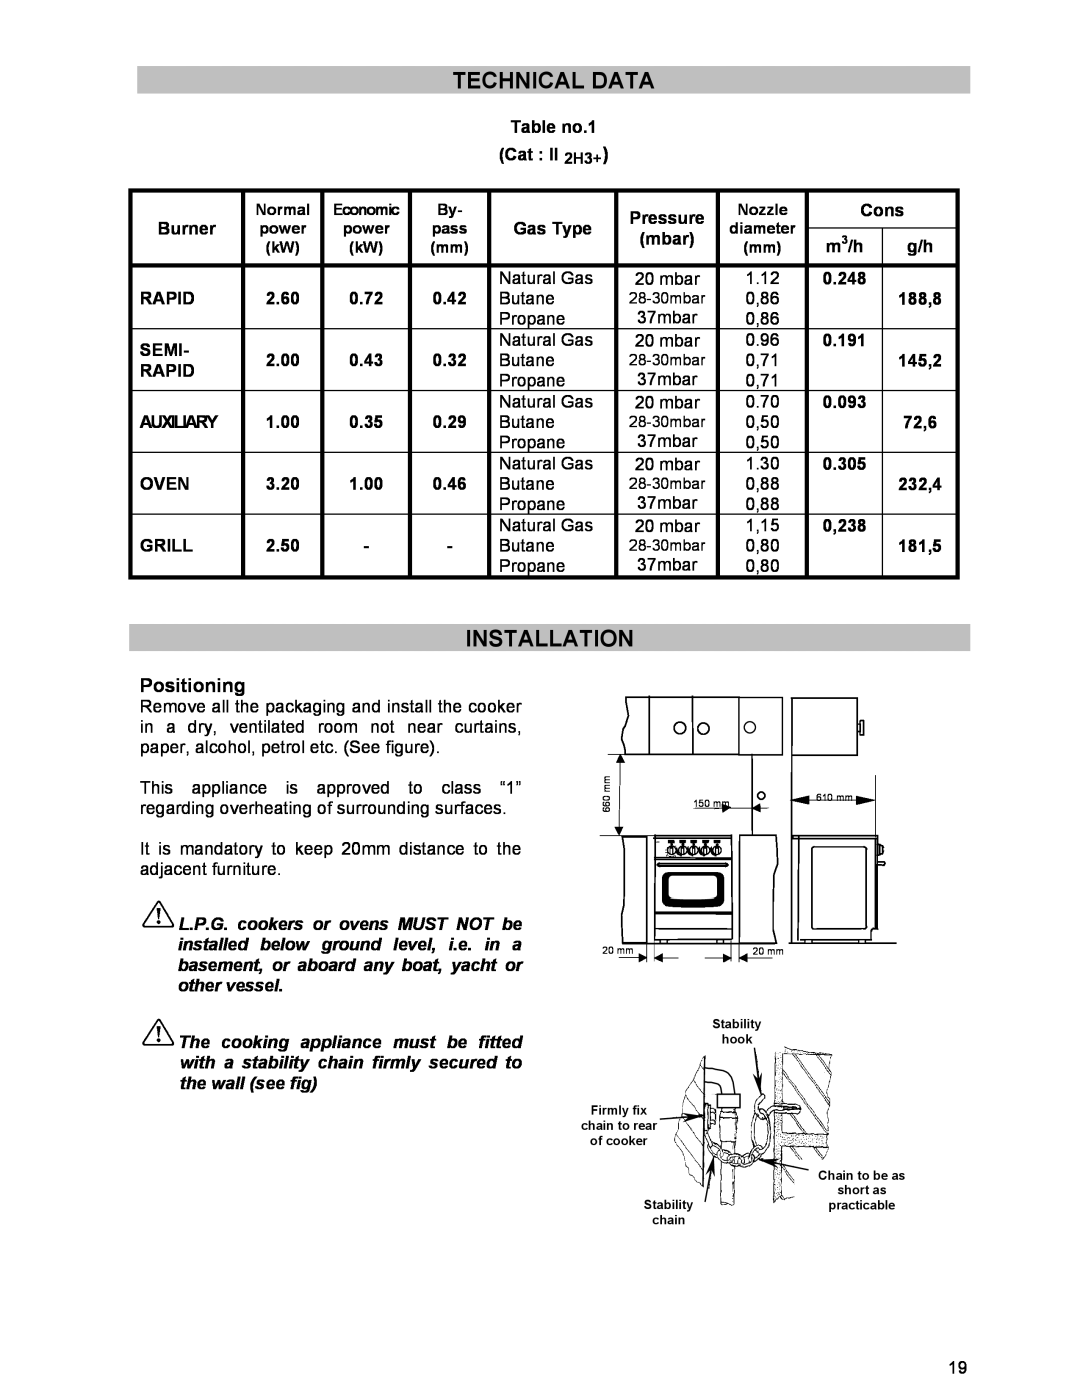 Moffat GSC 5061 manual Technical Data, Installation, Positioning 